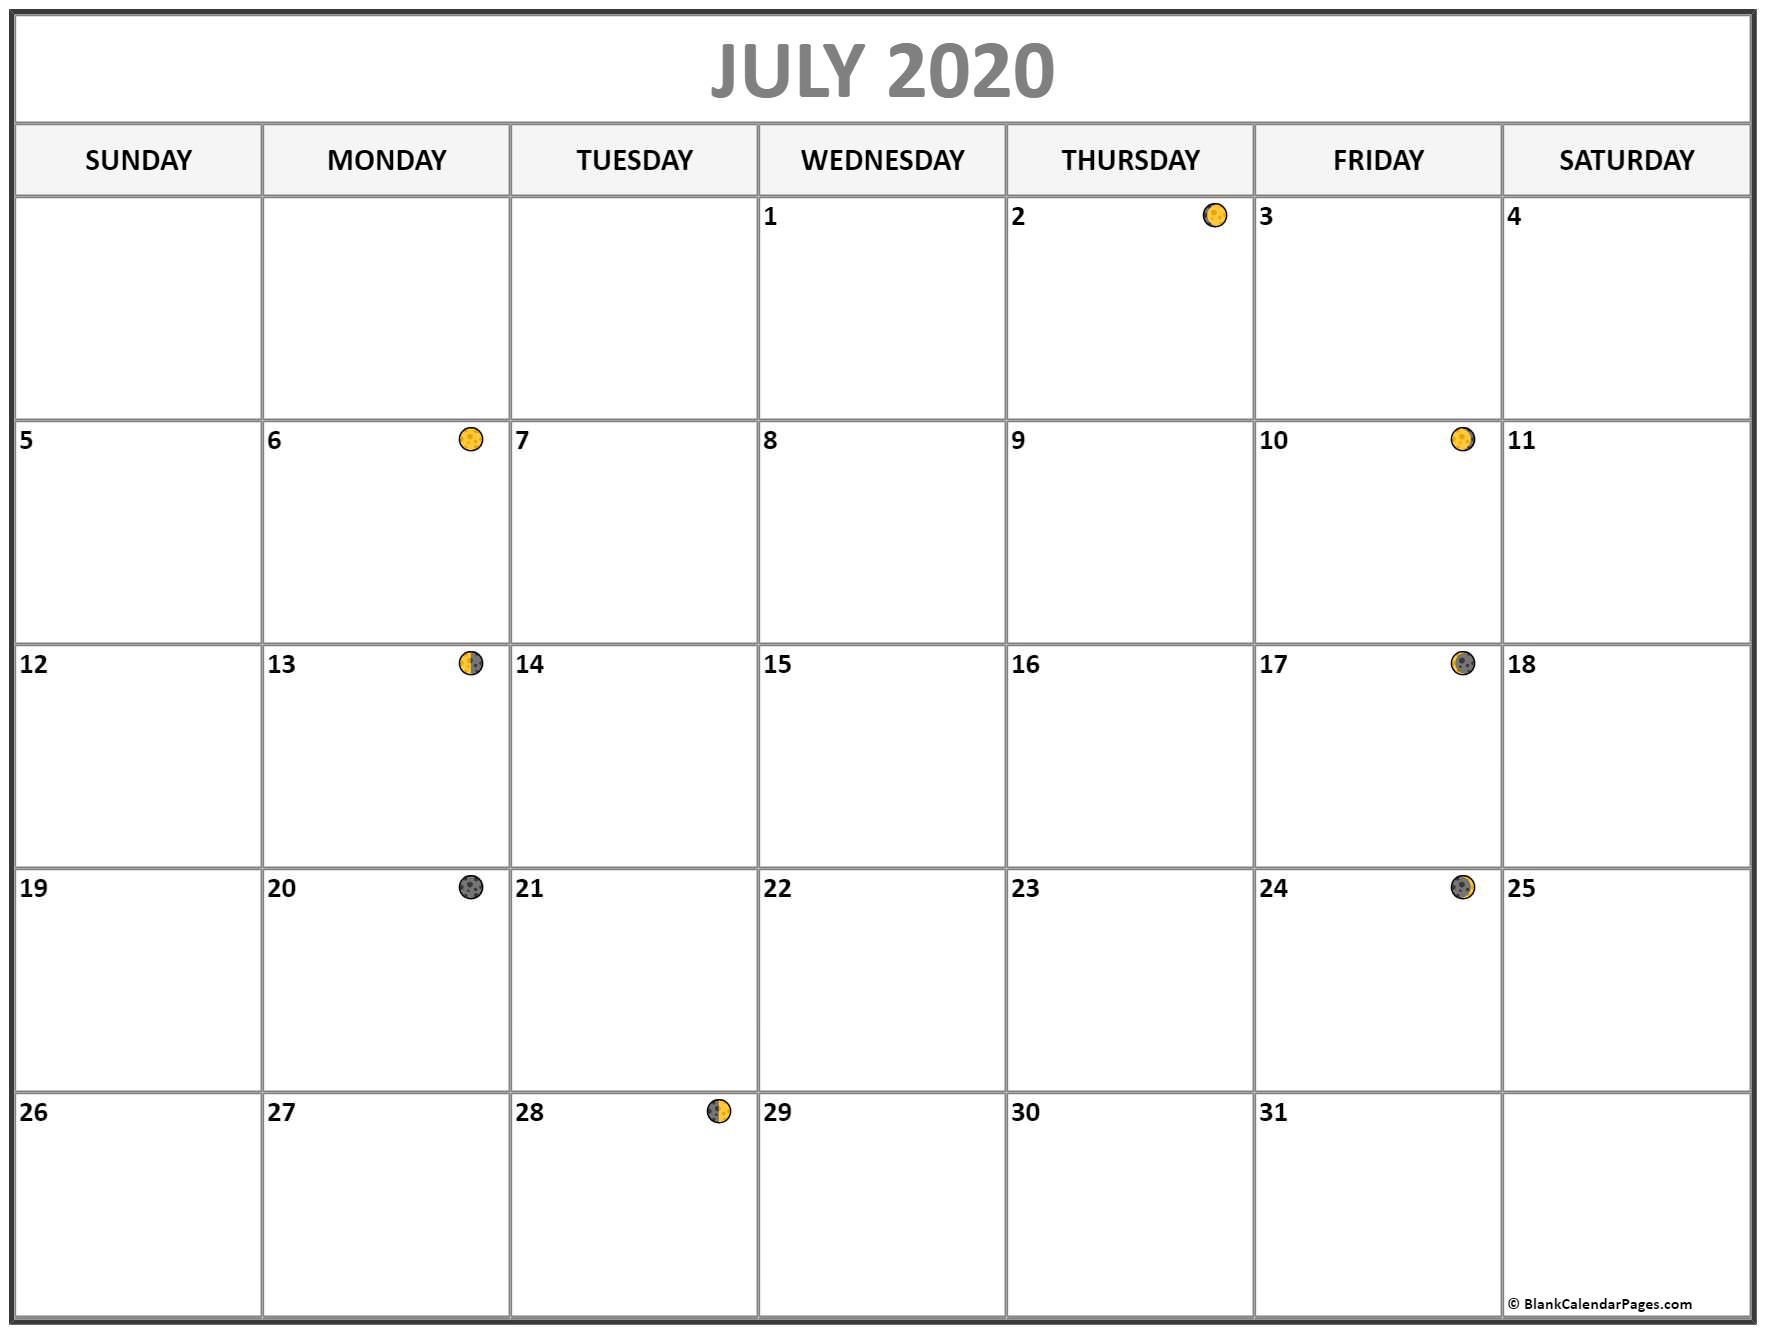 July 2020 lunar calendar